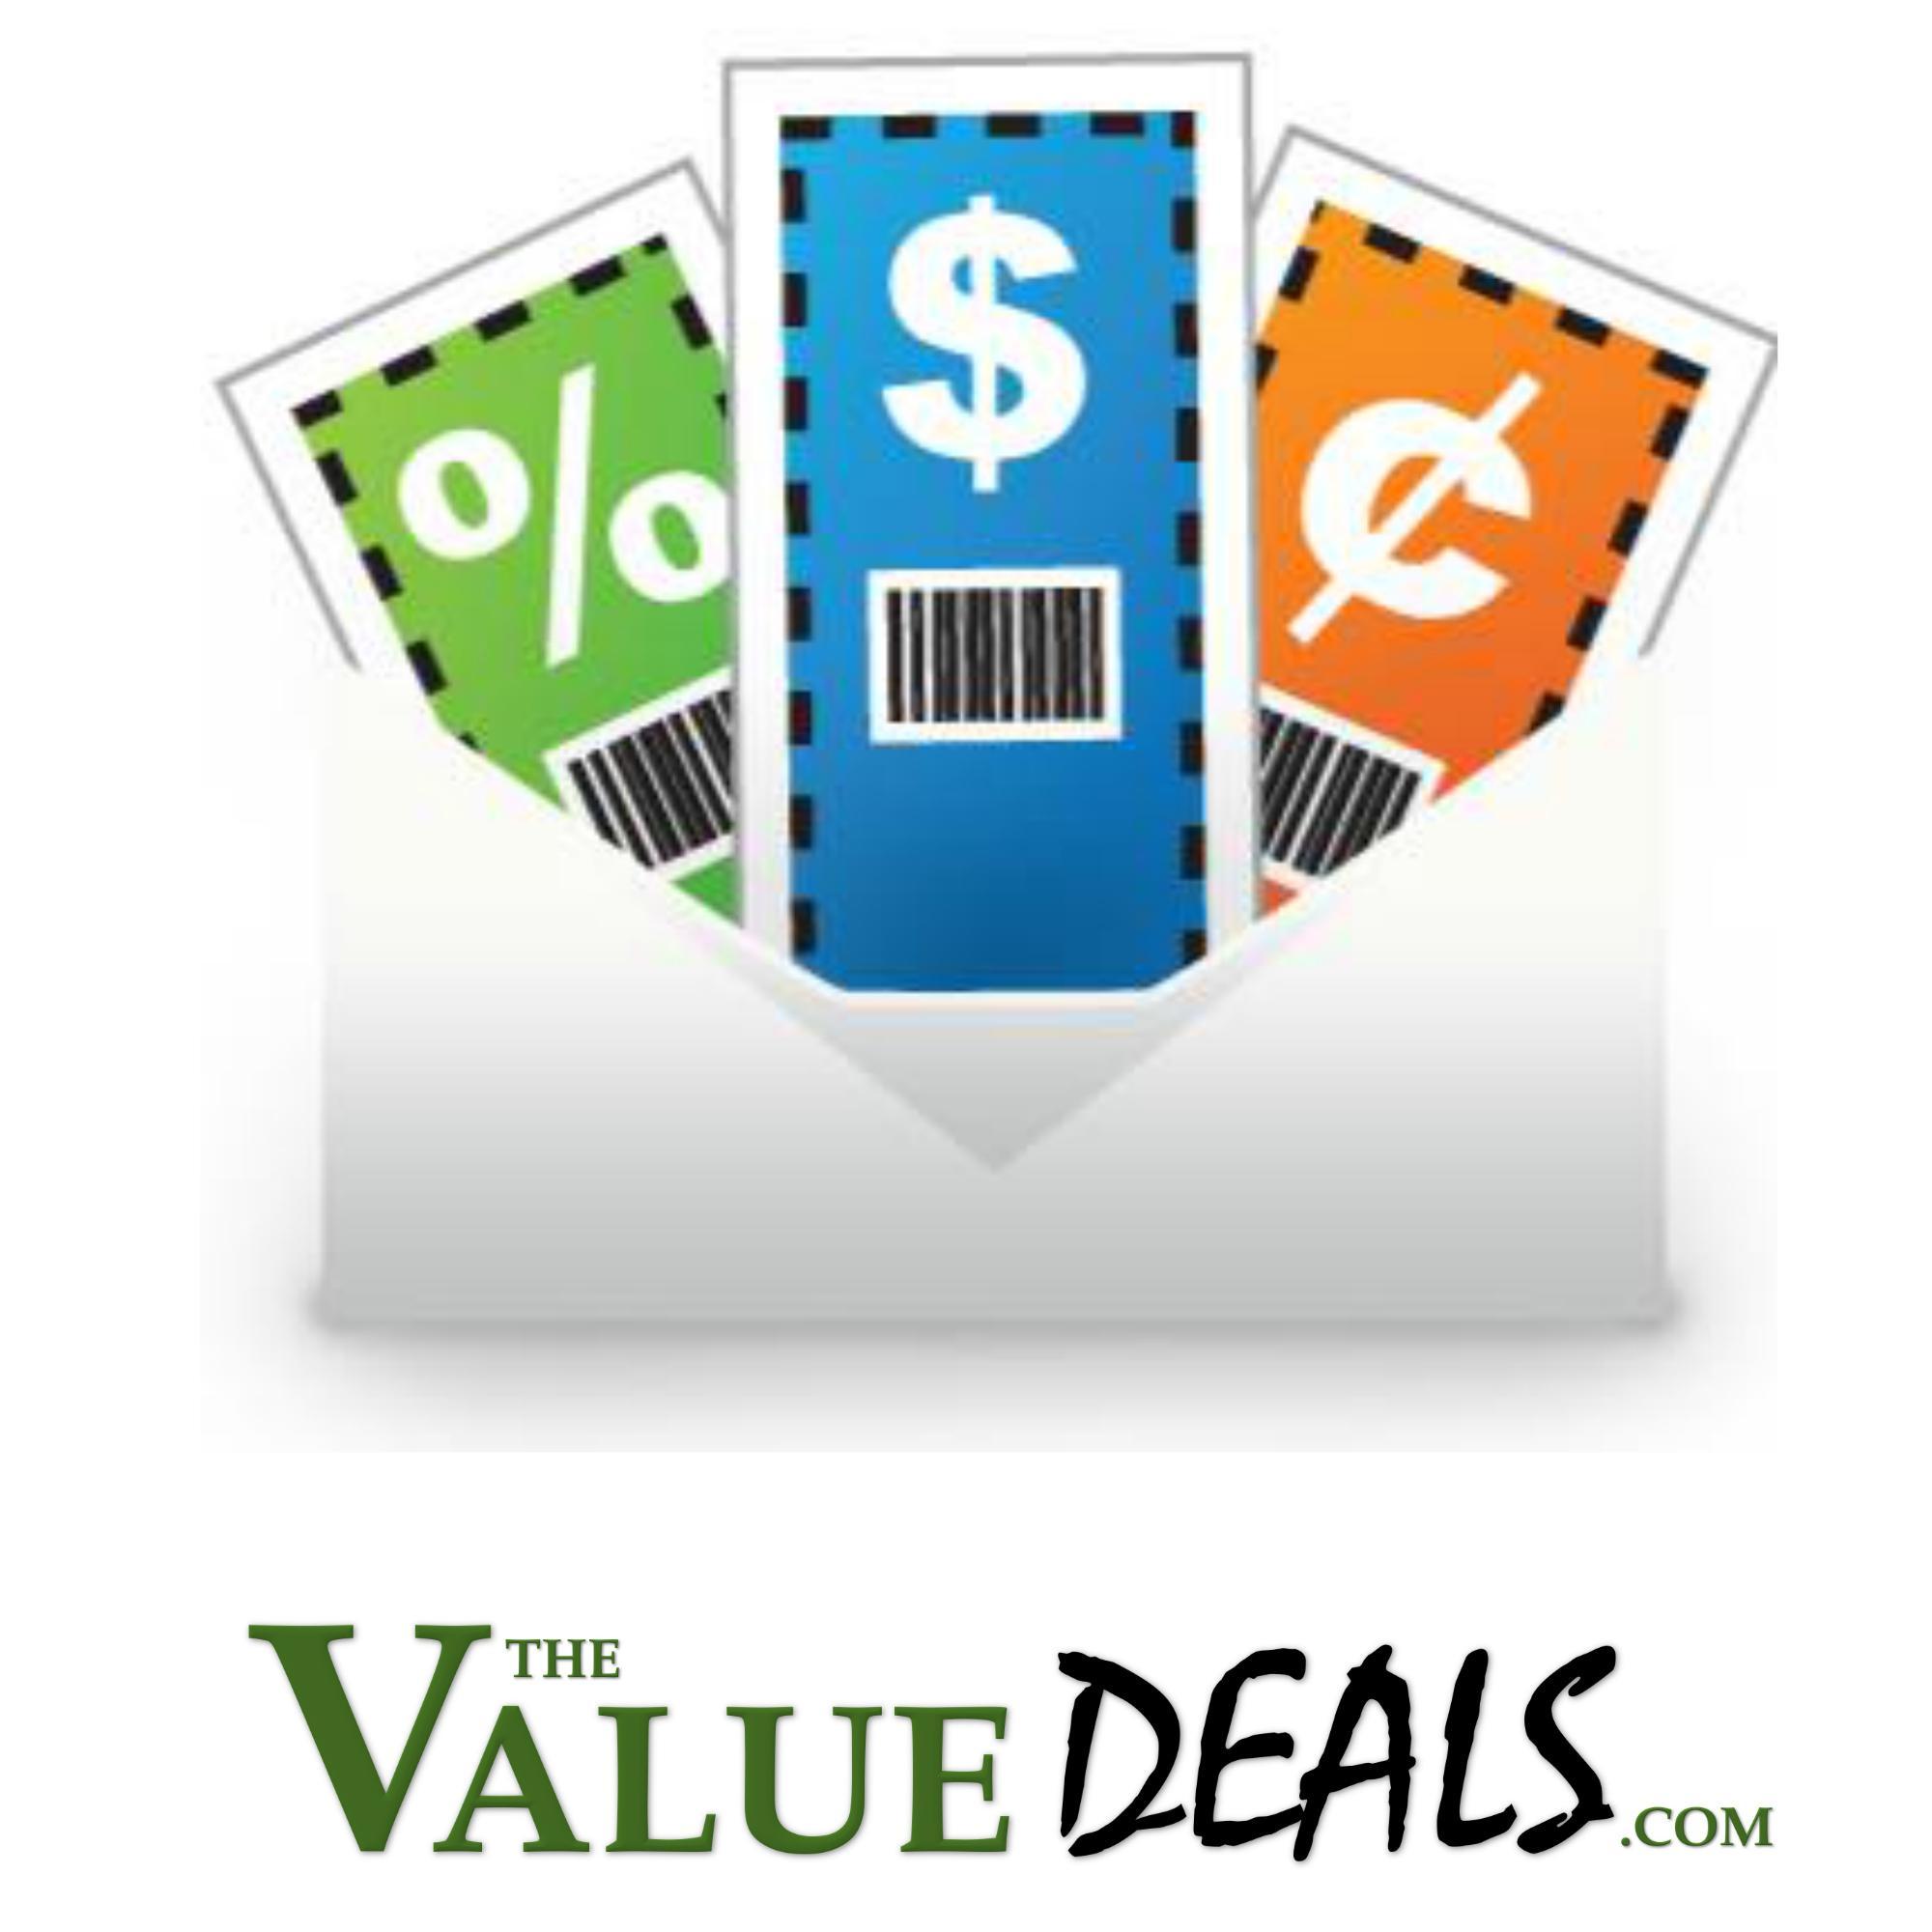 The Value Deals